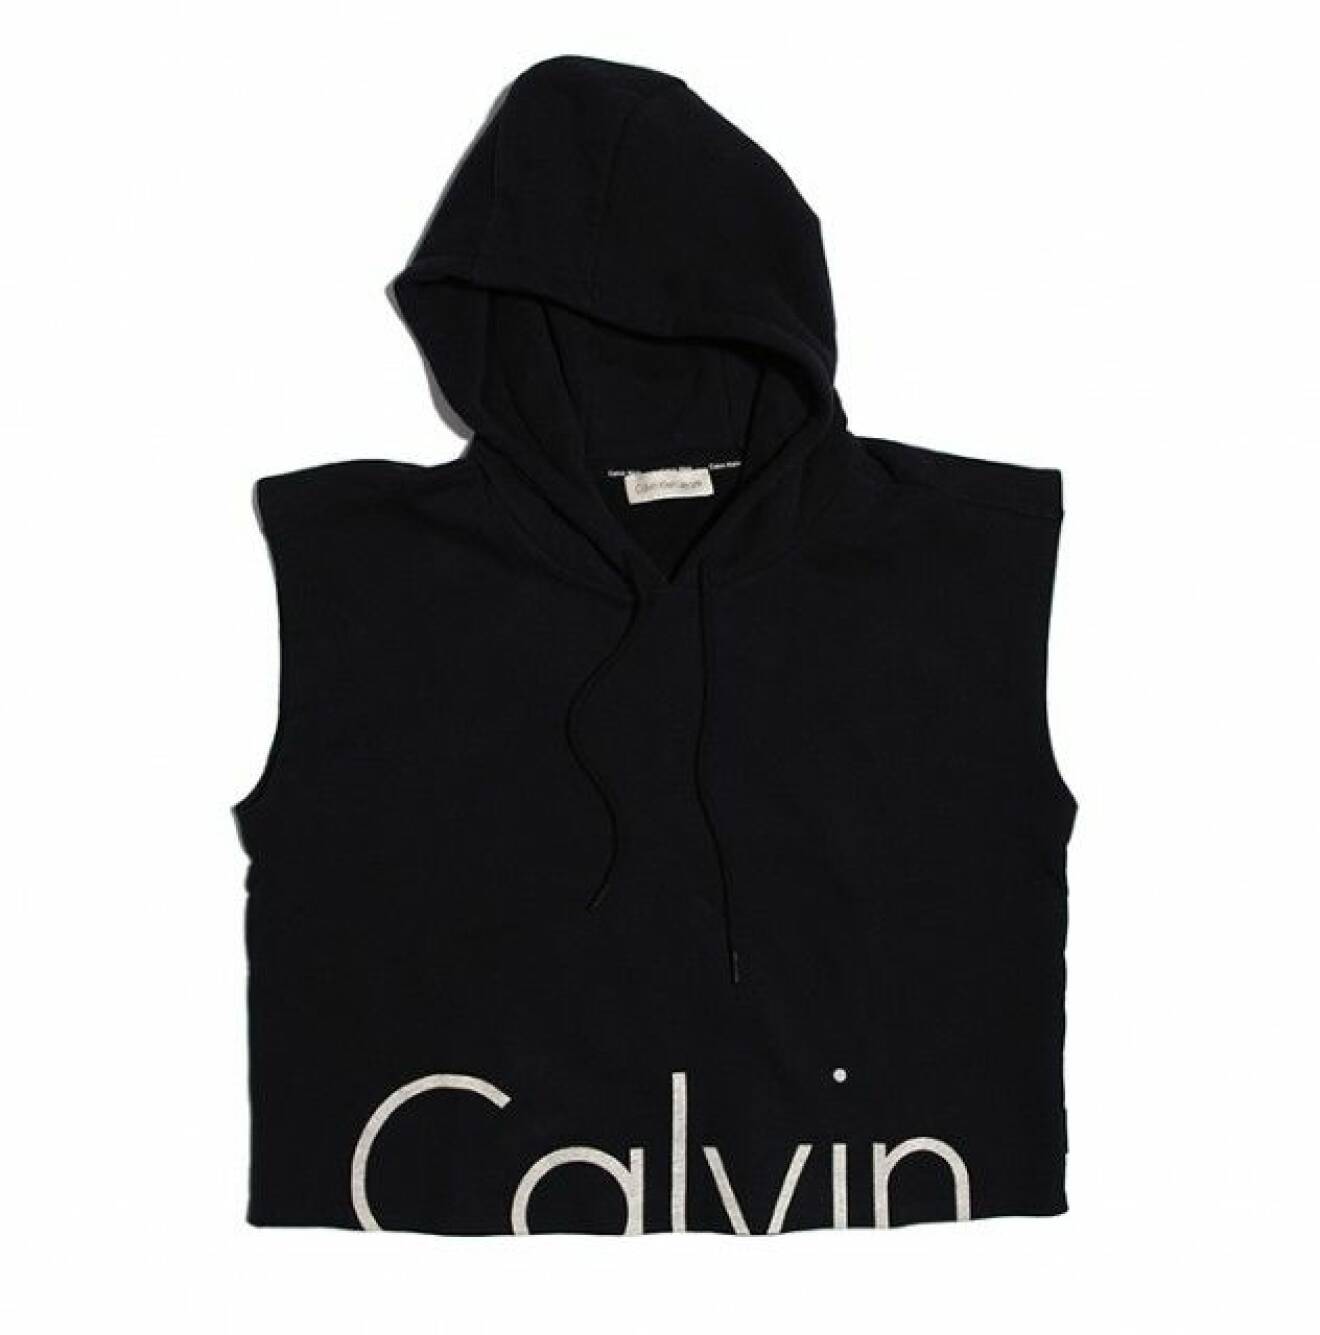 calvin-klein-jeans-s15-mycalvins-denim-series_ph_courtesy-calvin-klein-inc-09-633x640